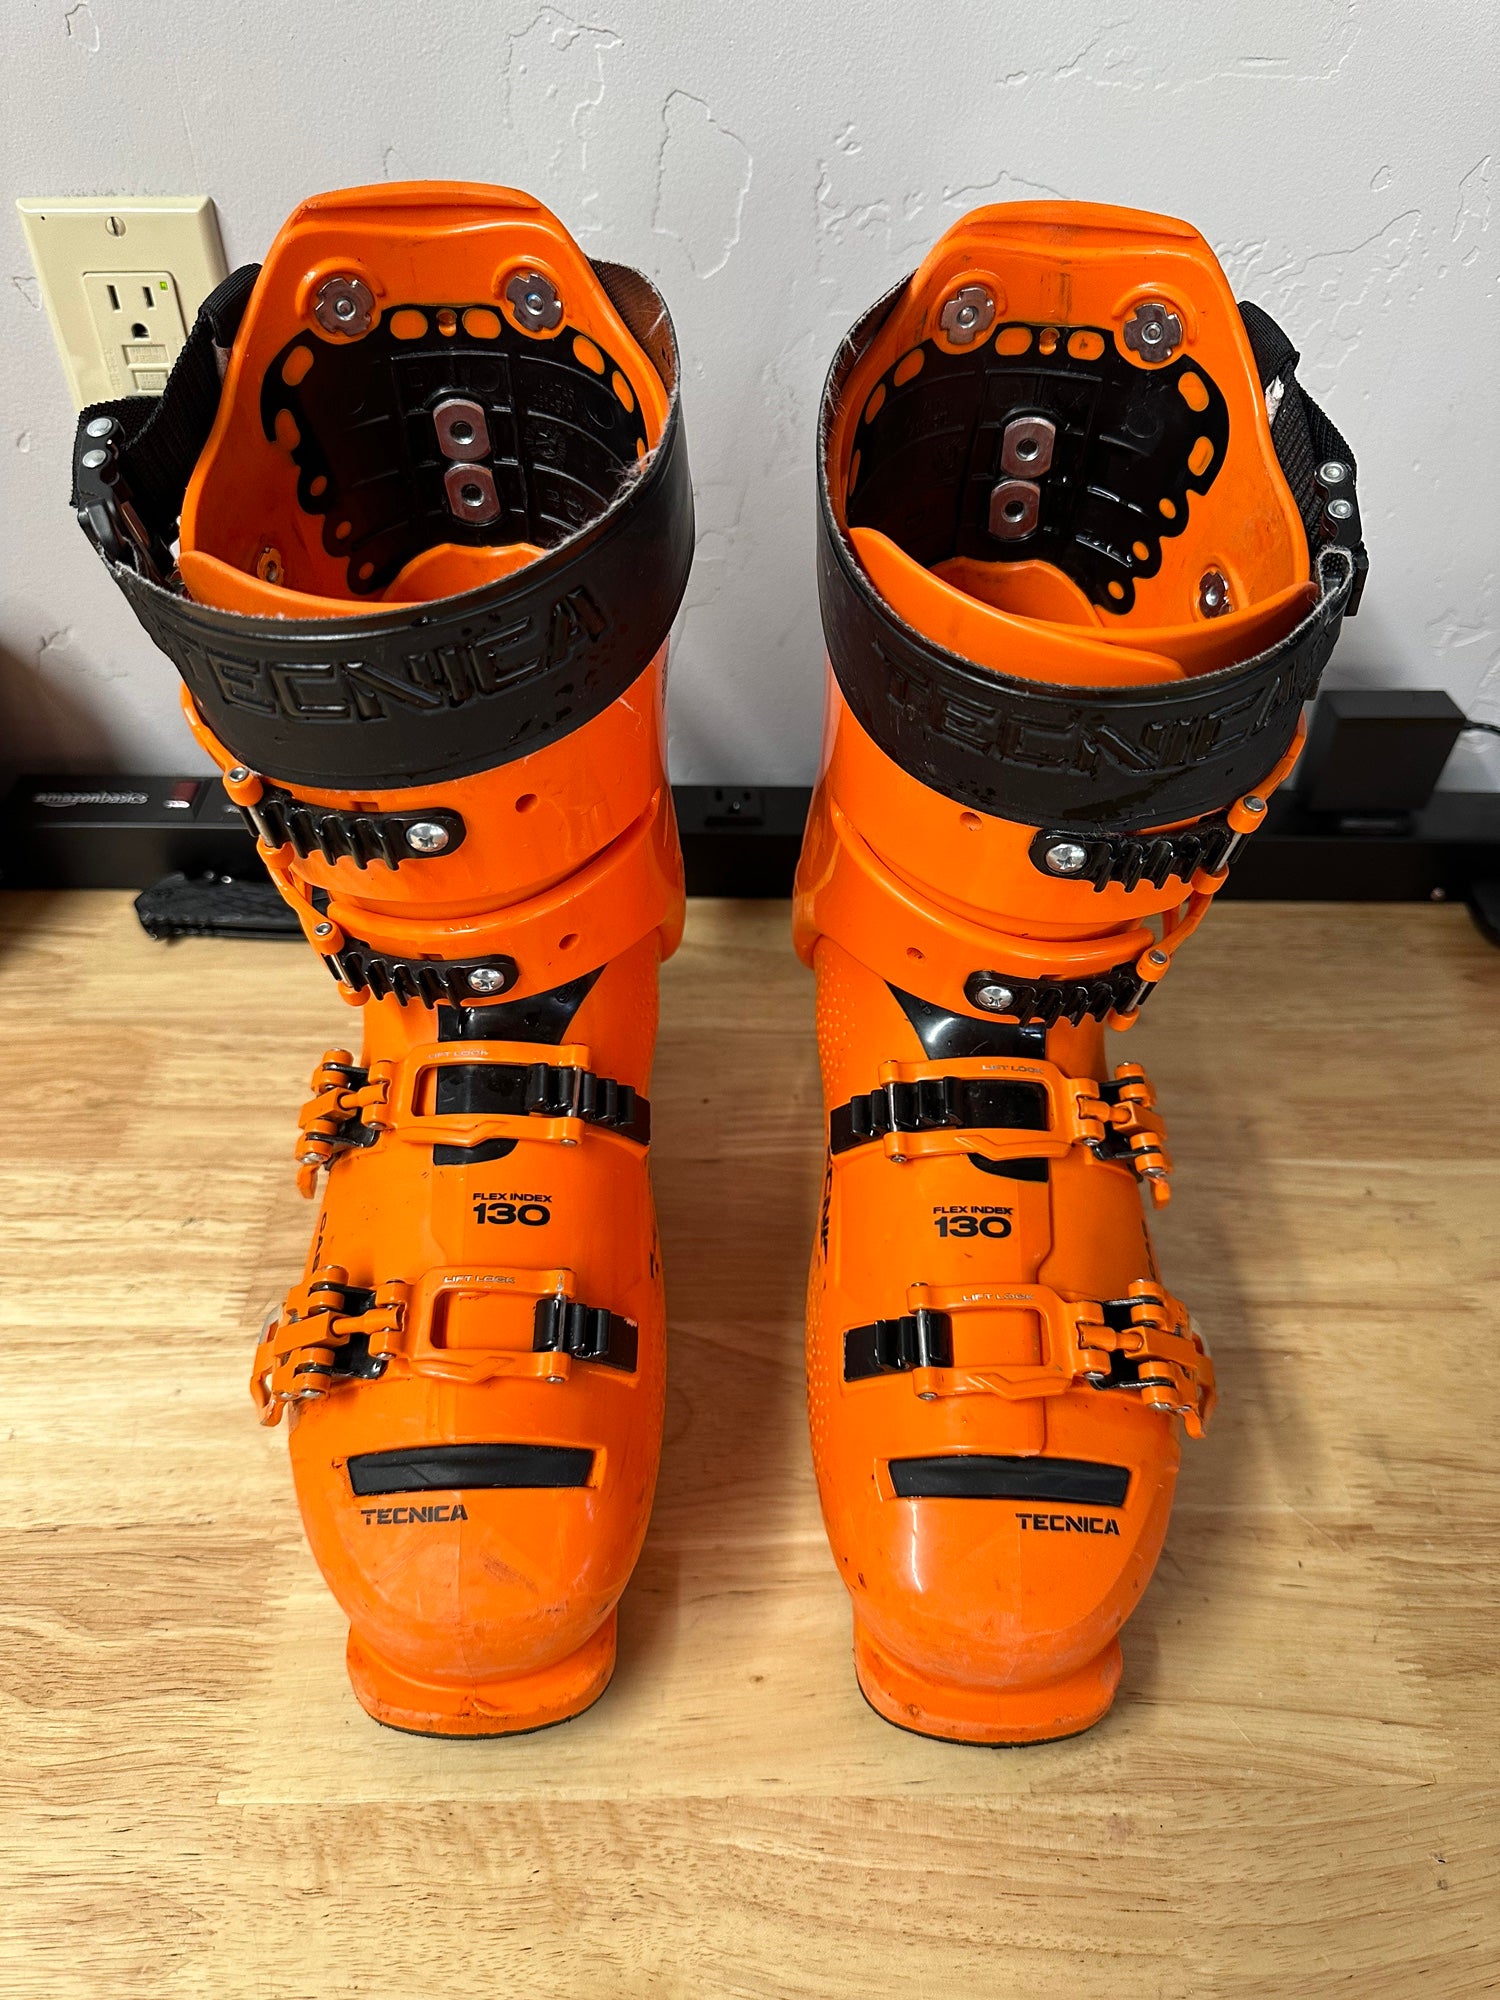 Tecnica Mach1 LV 120 Ski Boots 2021 - Used